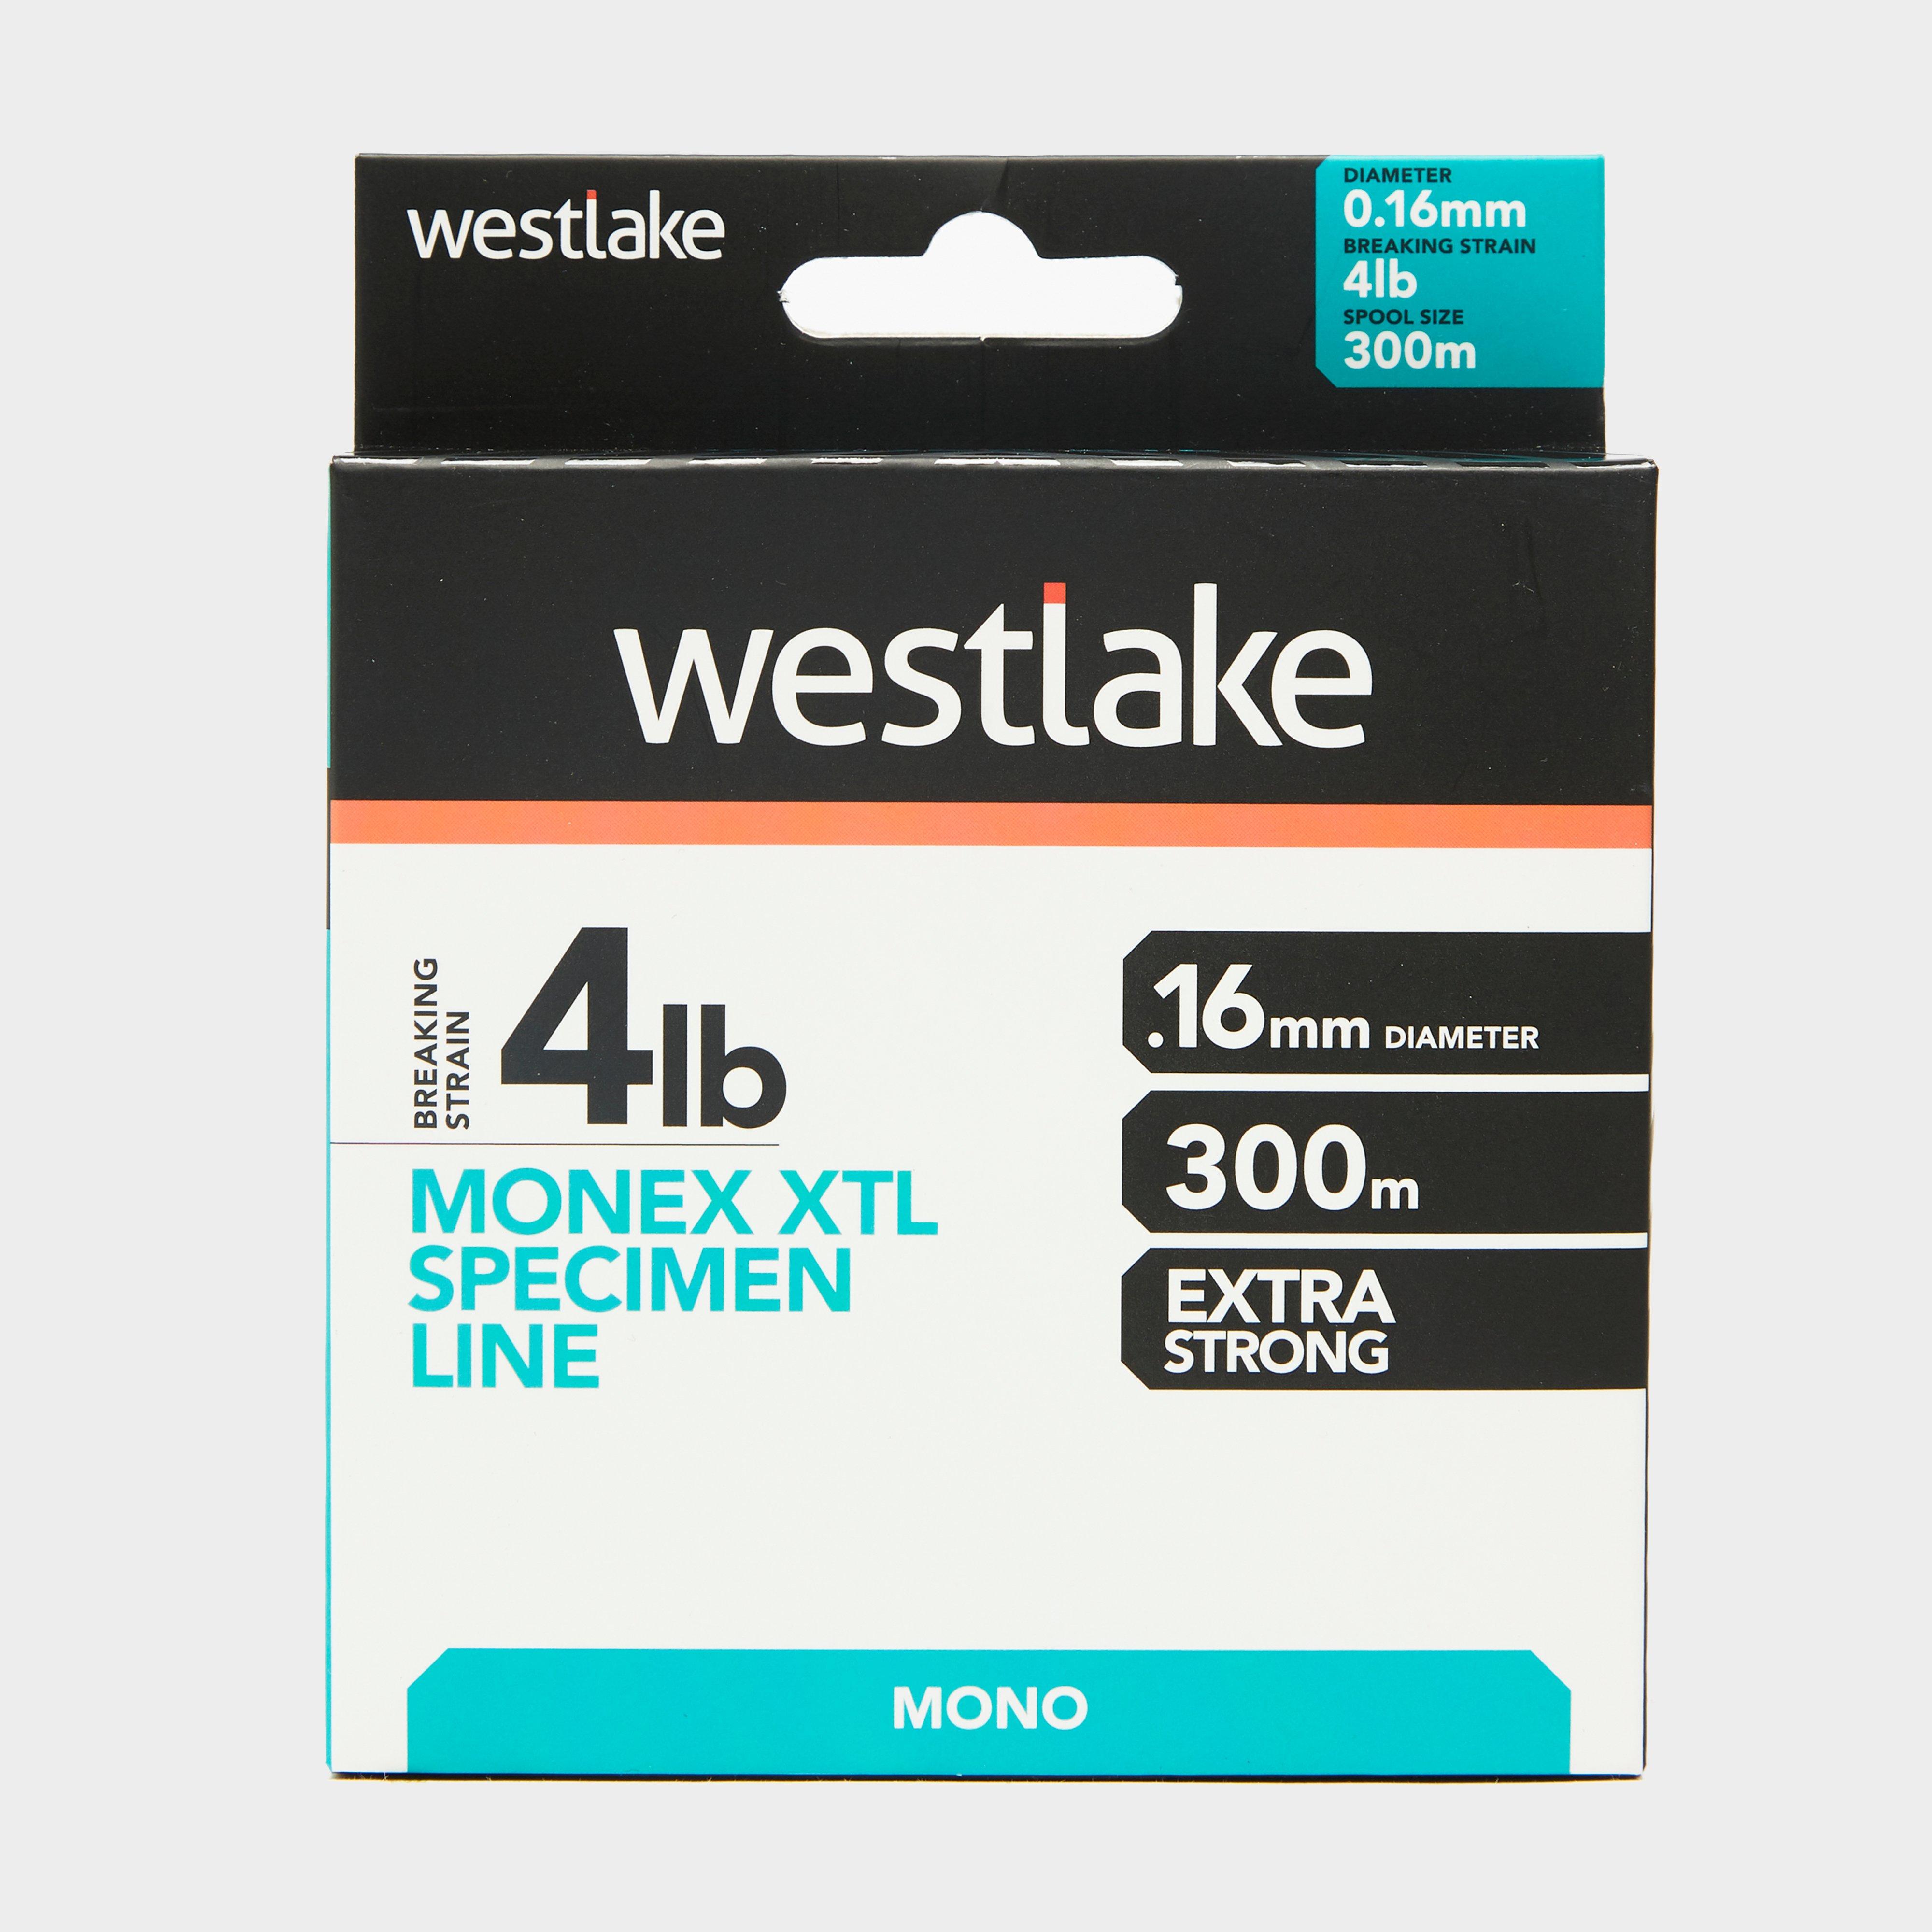 Westlake Xl Specimen Mono 4lb 18mm 300m - Multi/18mm  Multi/18mm